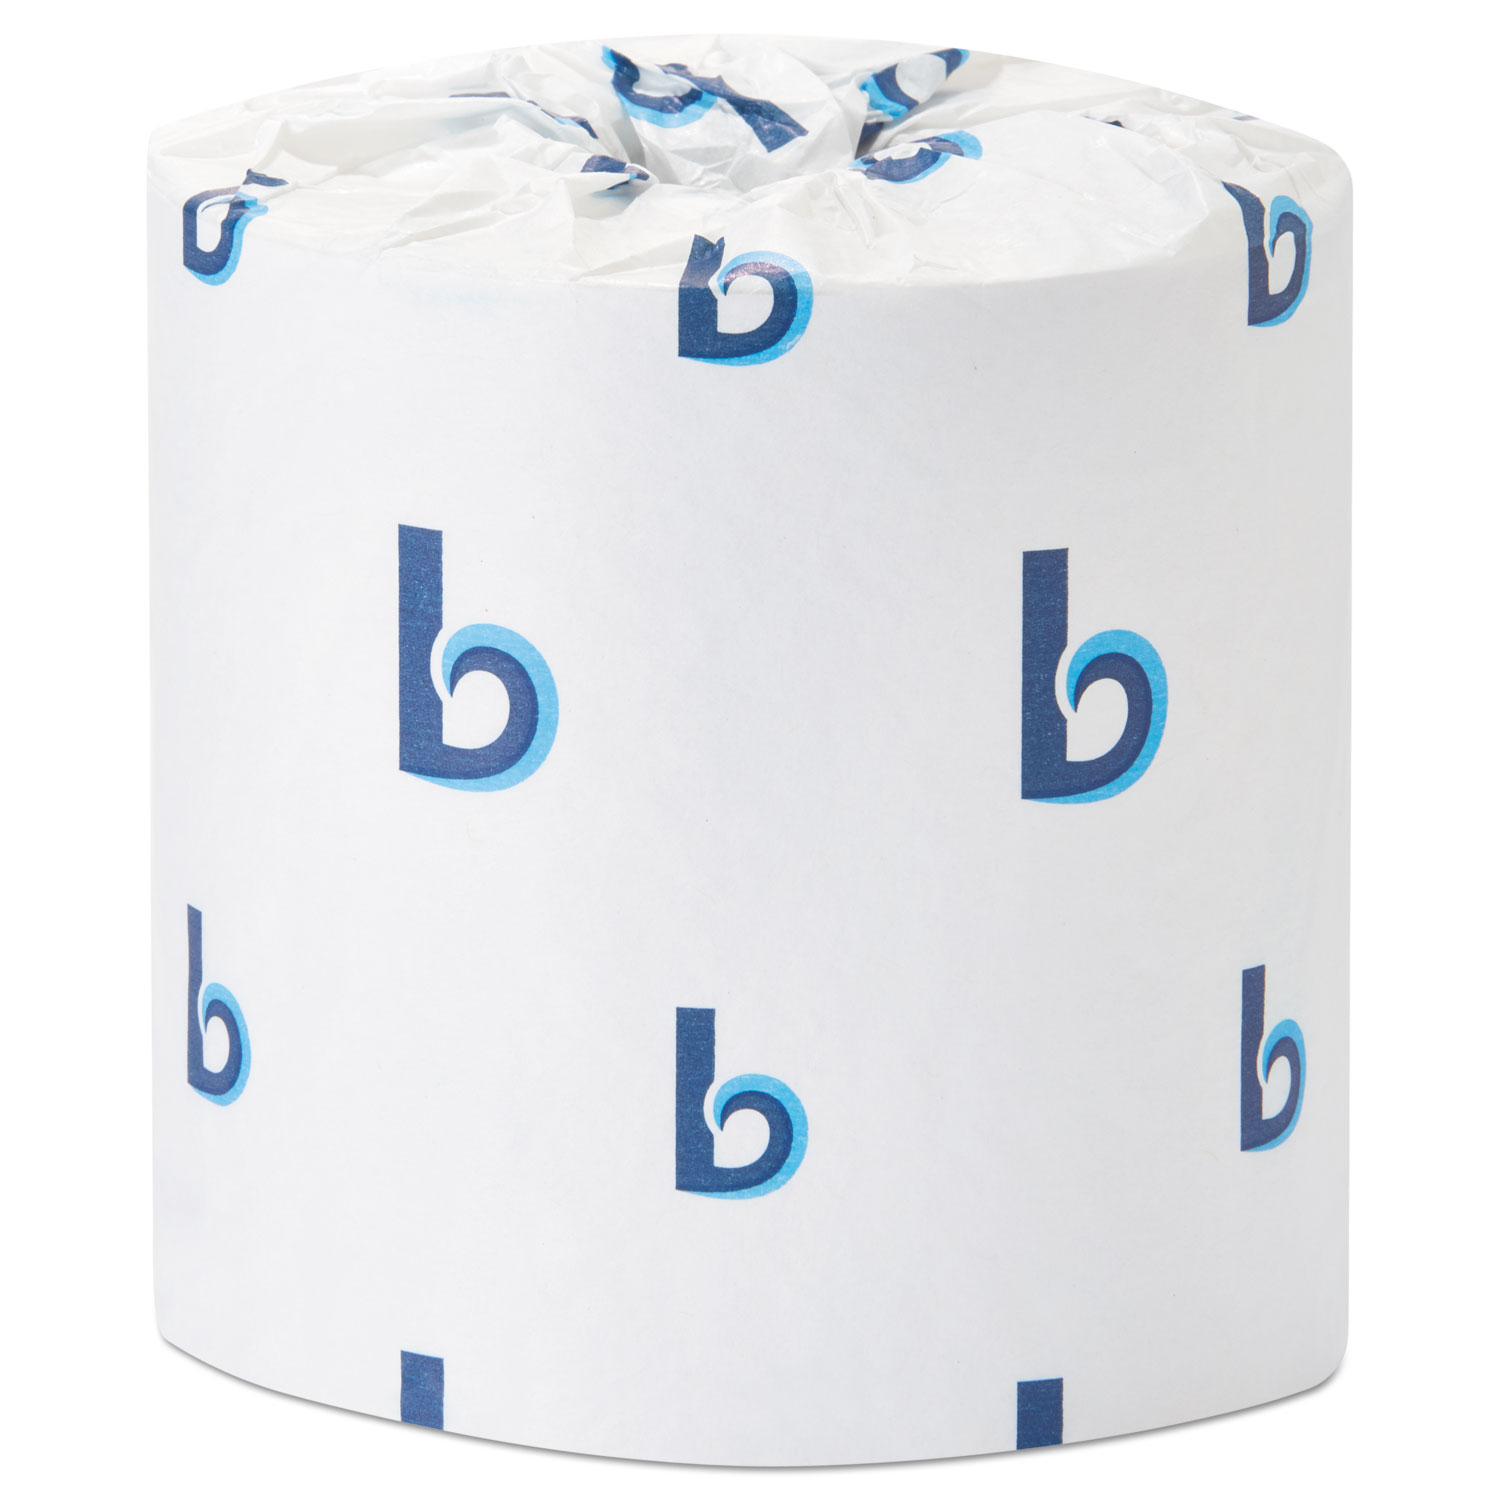  Boardwalk 4793 Office Packs Standard Bathroom Tissue, Septic Safe, 1-Ply, White, 1000 Sheets/Roll, 40 Rolls/Carton (BWK6182) 